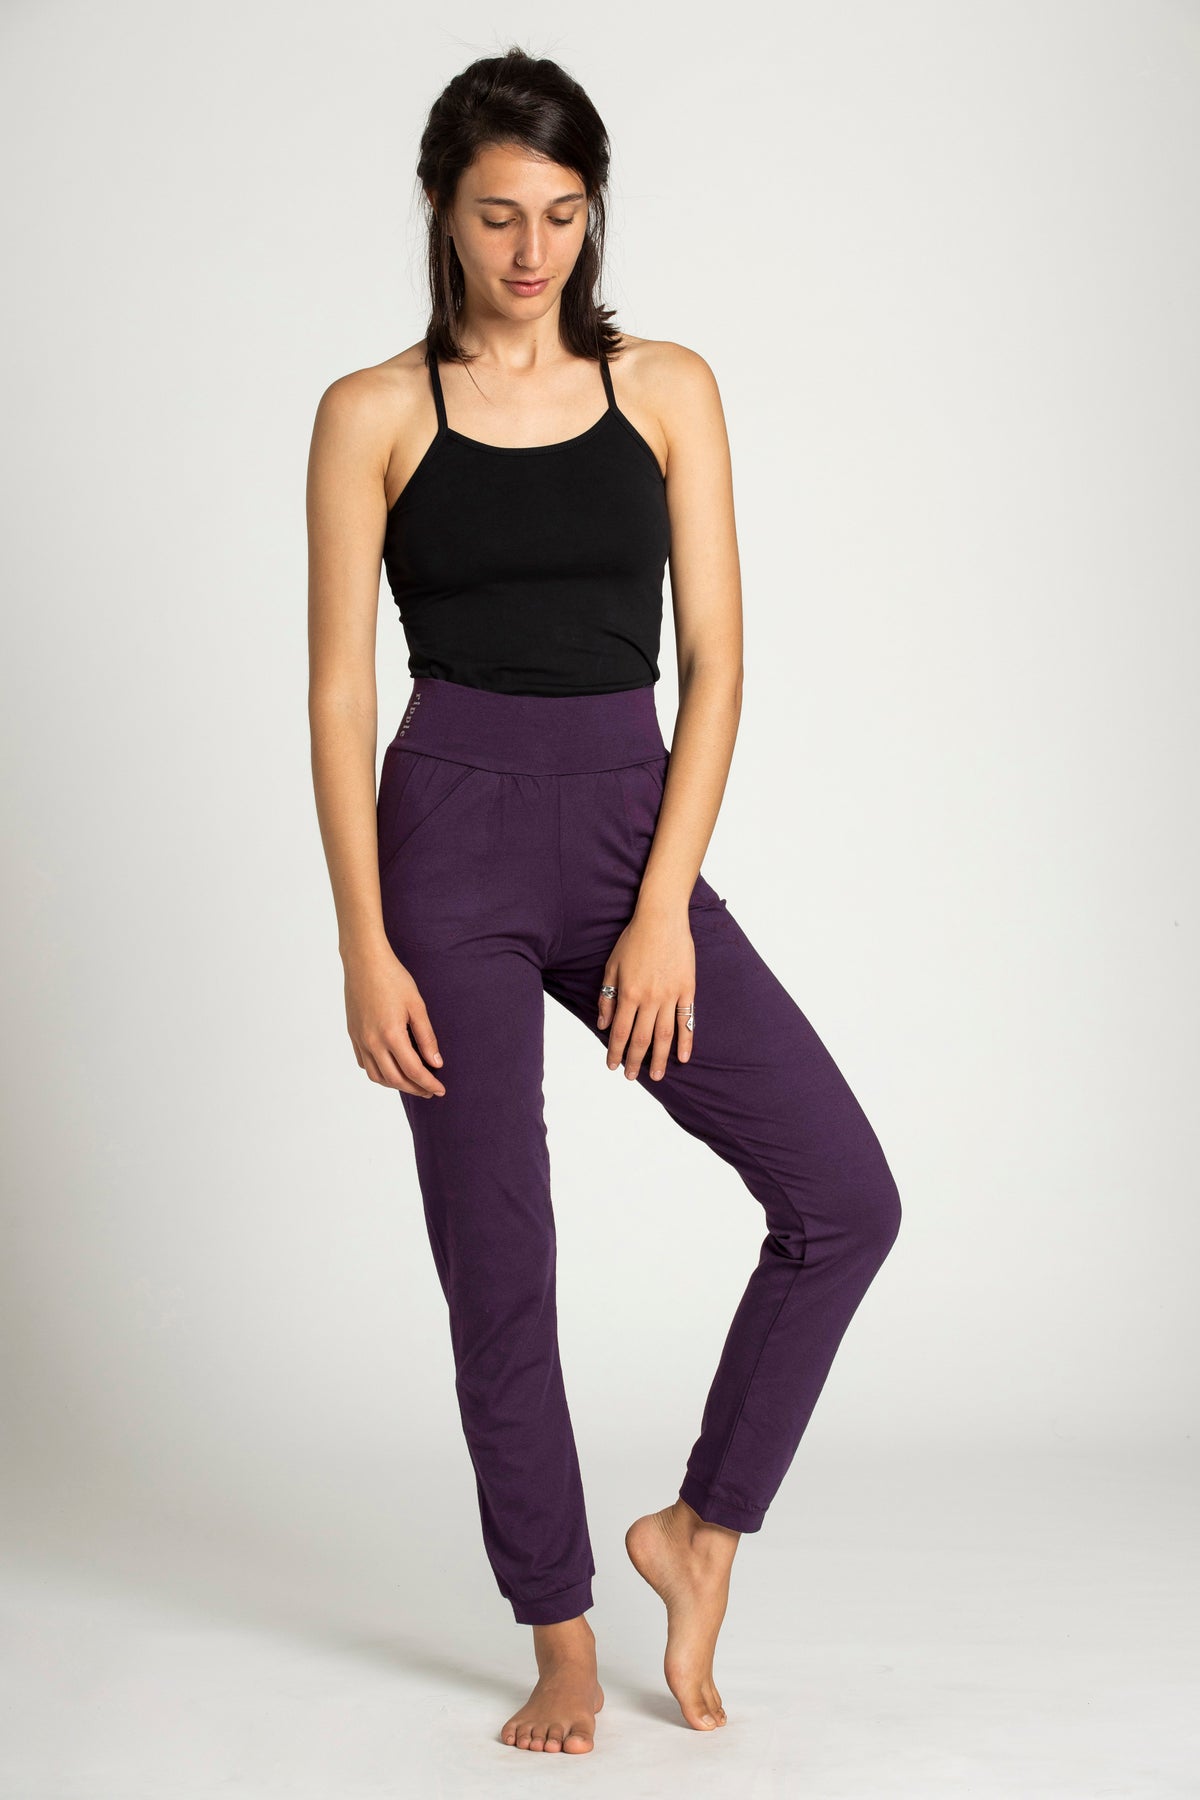 Slouchy Unisex Yoga Pants